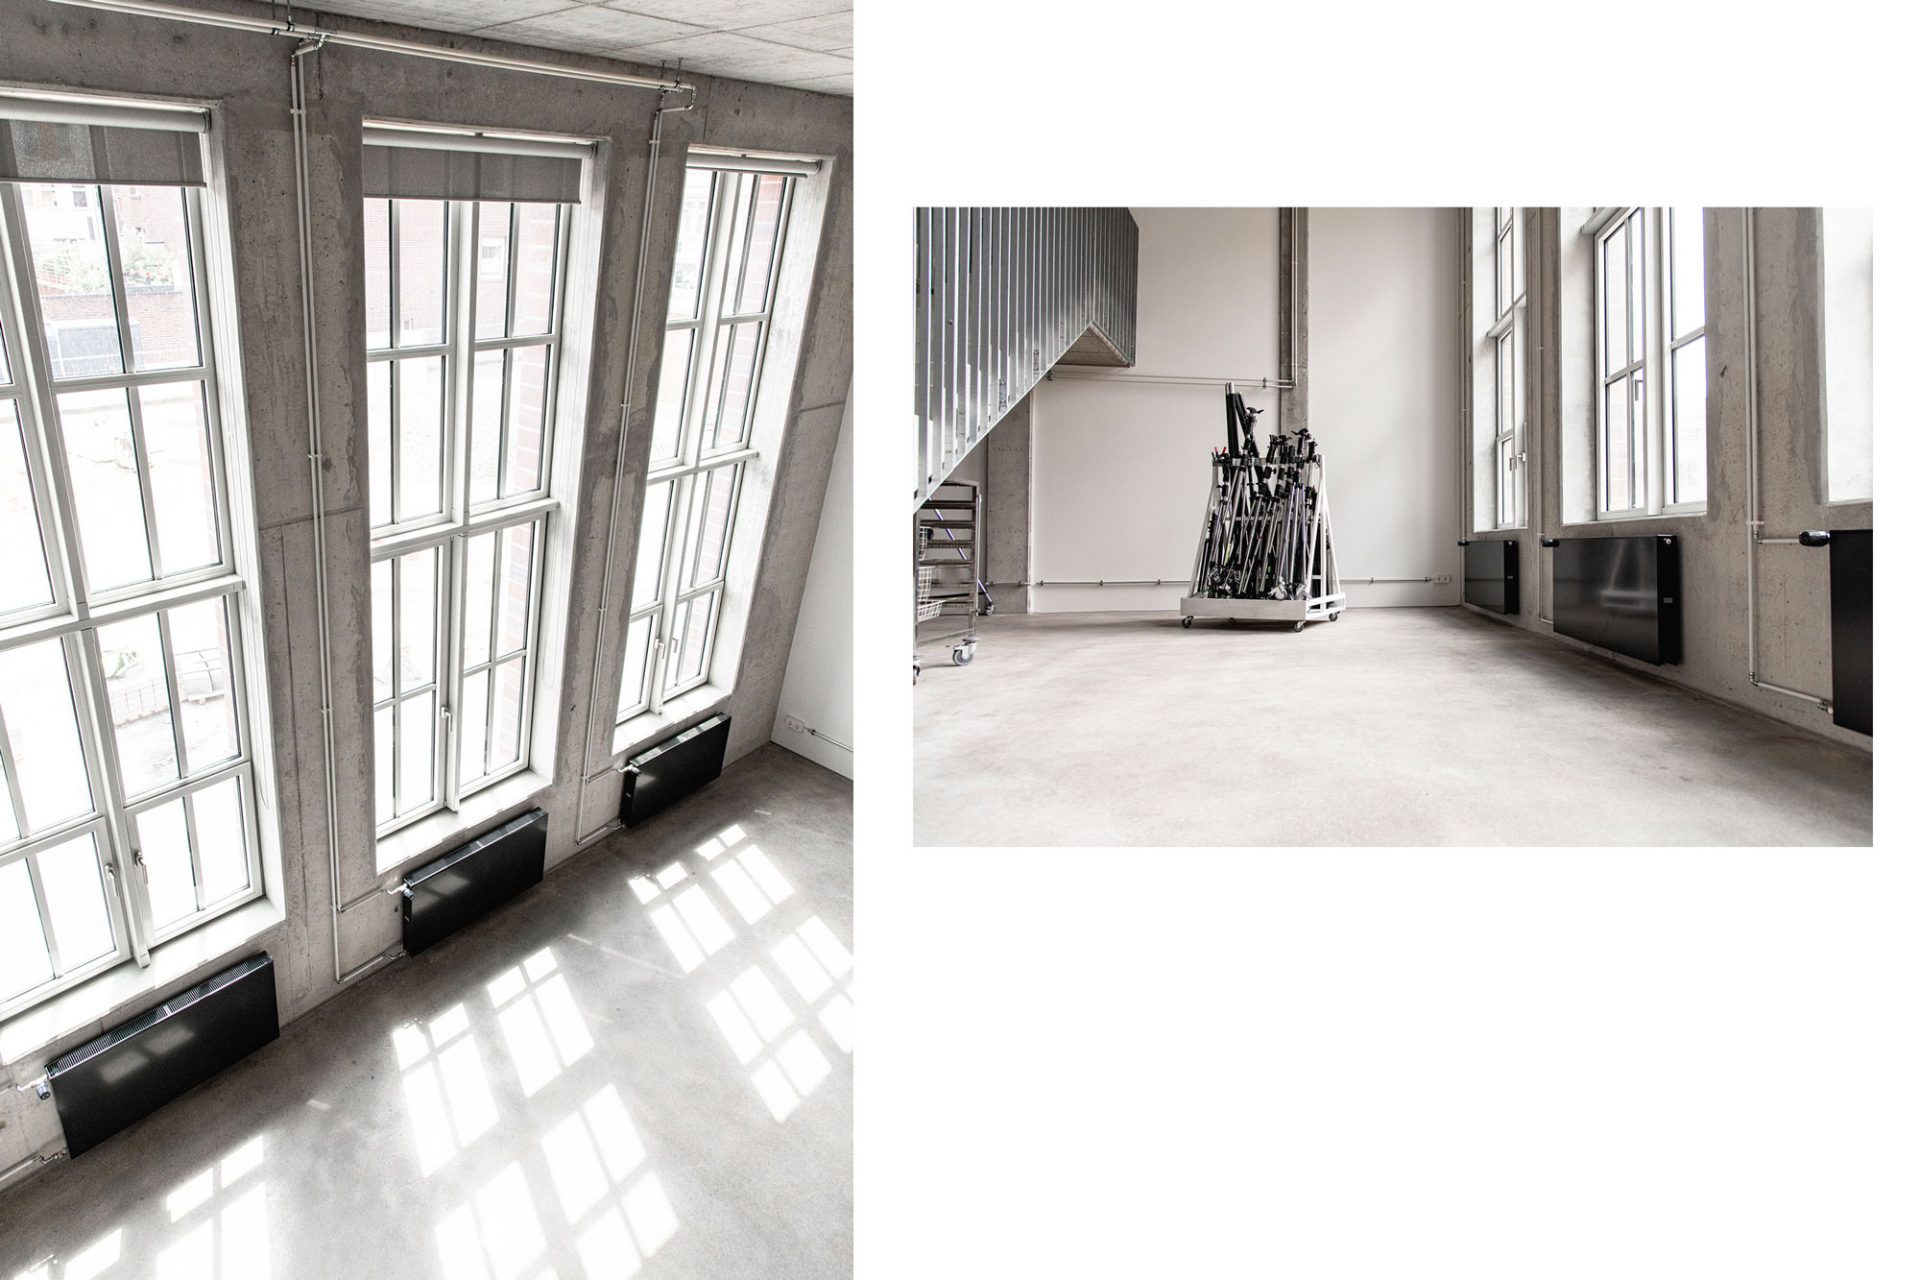 Fotostudio Mieten in Köln Nippes - große Fenster & Tageslicht